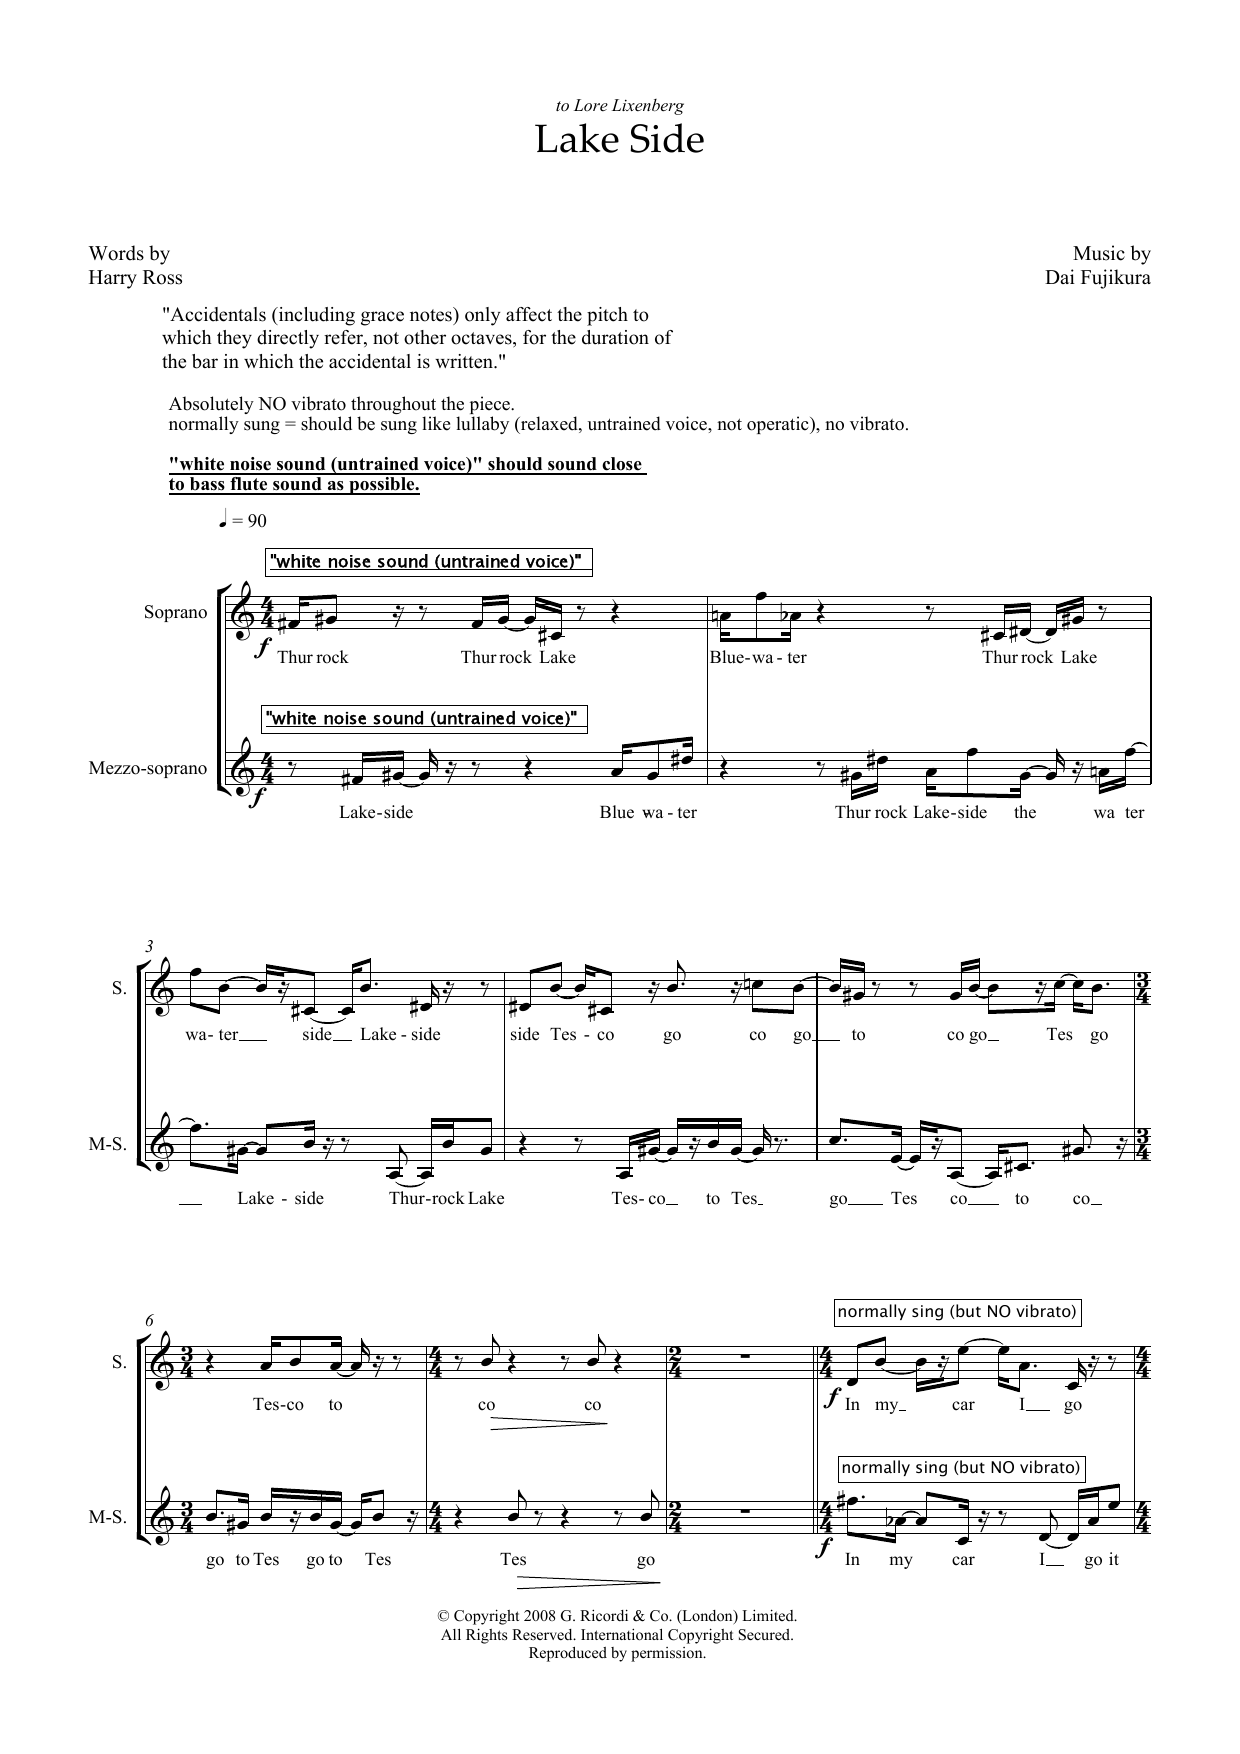 Download Dai Fujikura Lake Side (for mezzo-soprano) Sheet Music and learn how to play Piano & Vocal PDF digital score in minutes